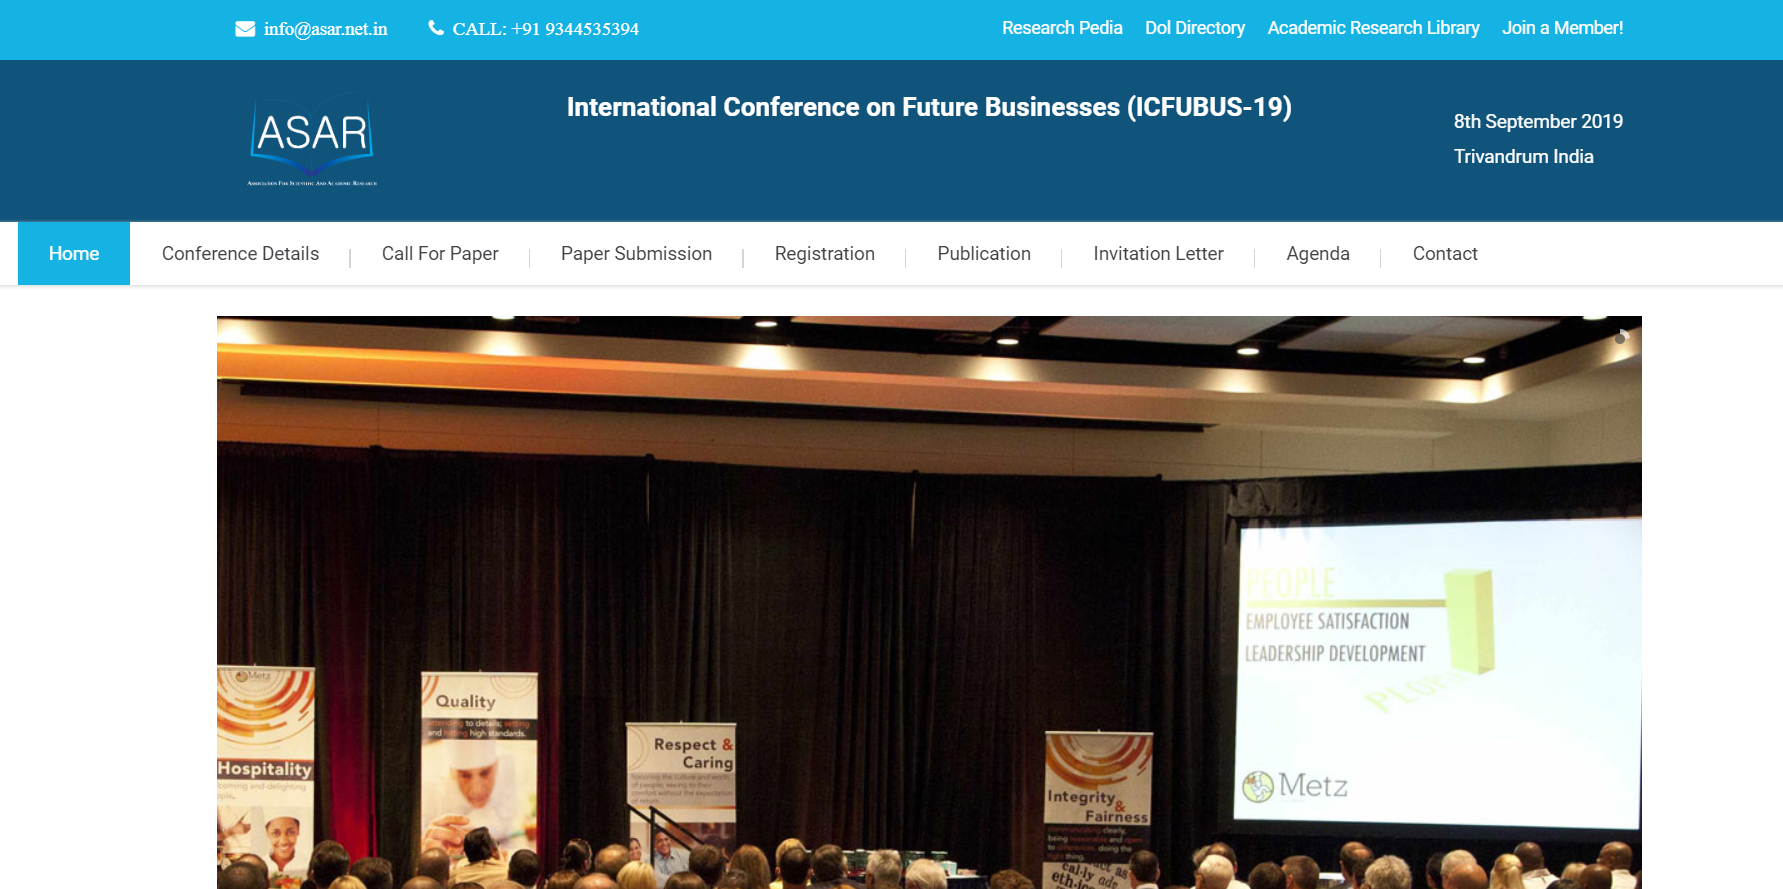 International Conference on Future Businesses (ICFUBUS-19), Thiruvananthapuram, Kerala, India